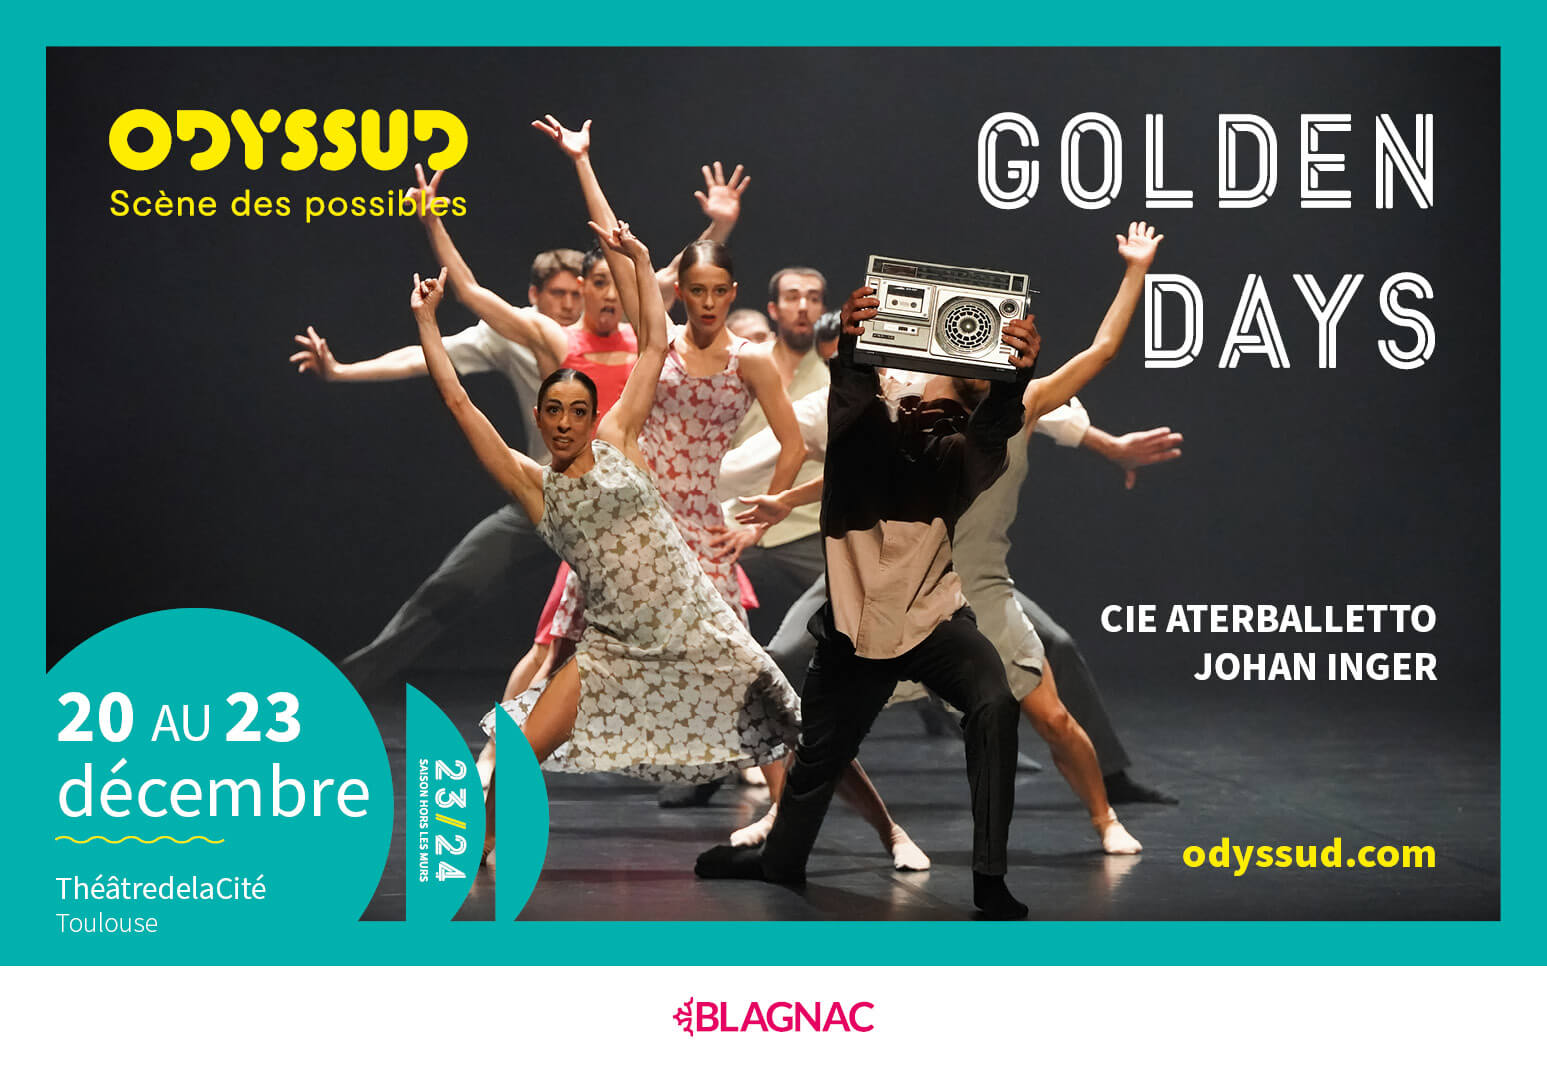  Odyssud - Golden Days news